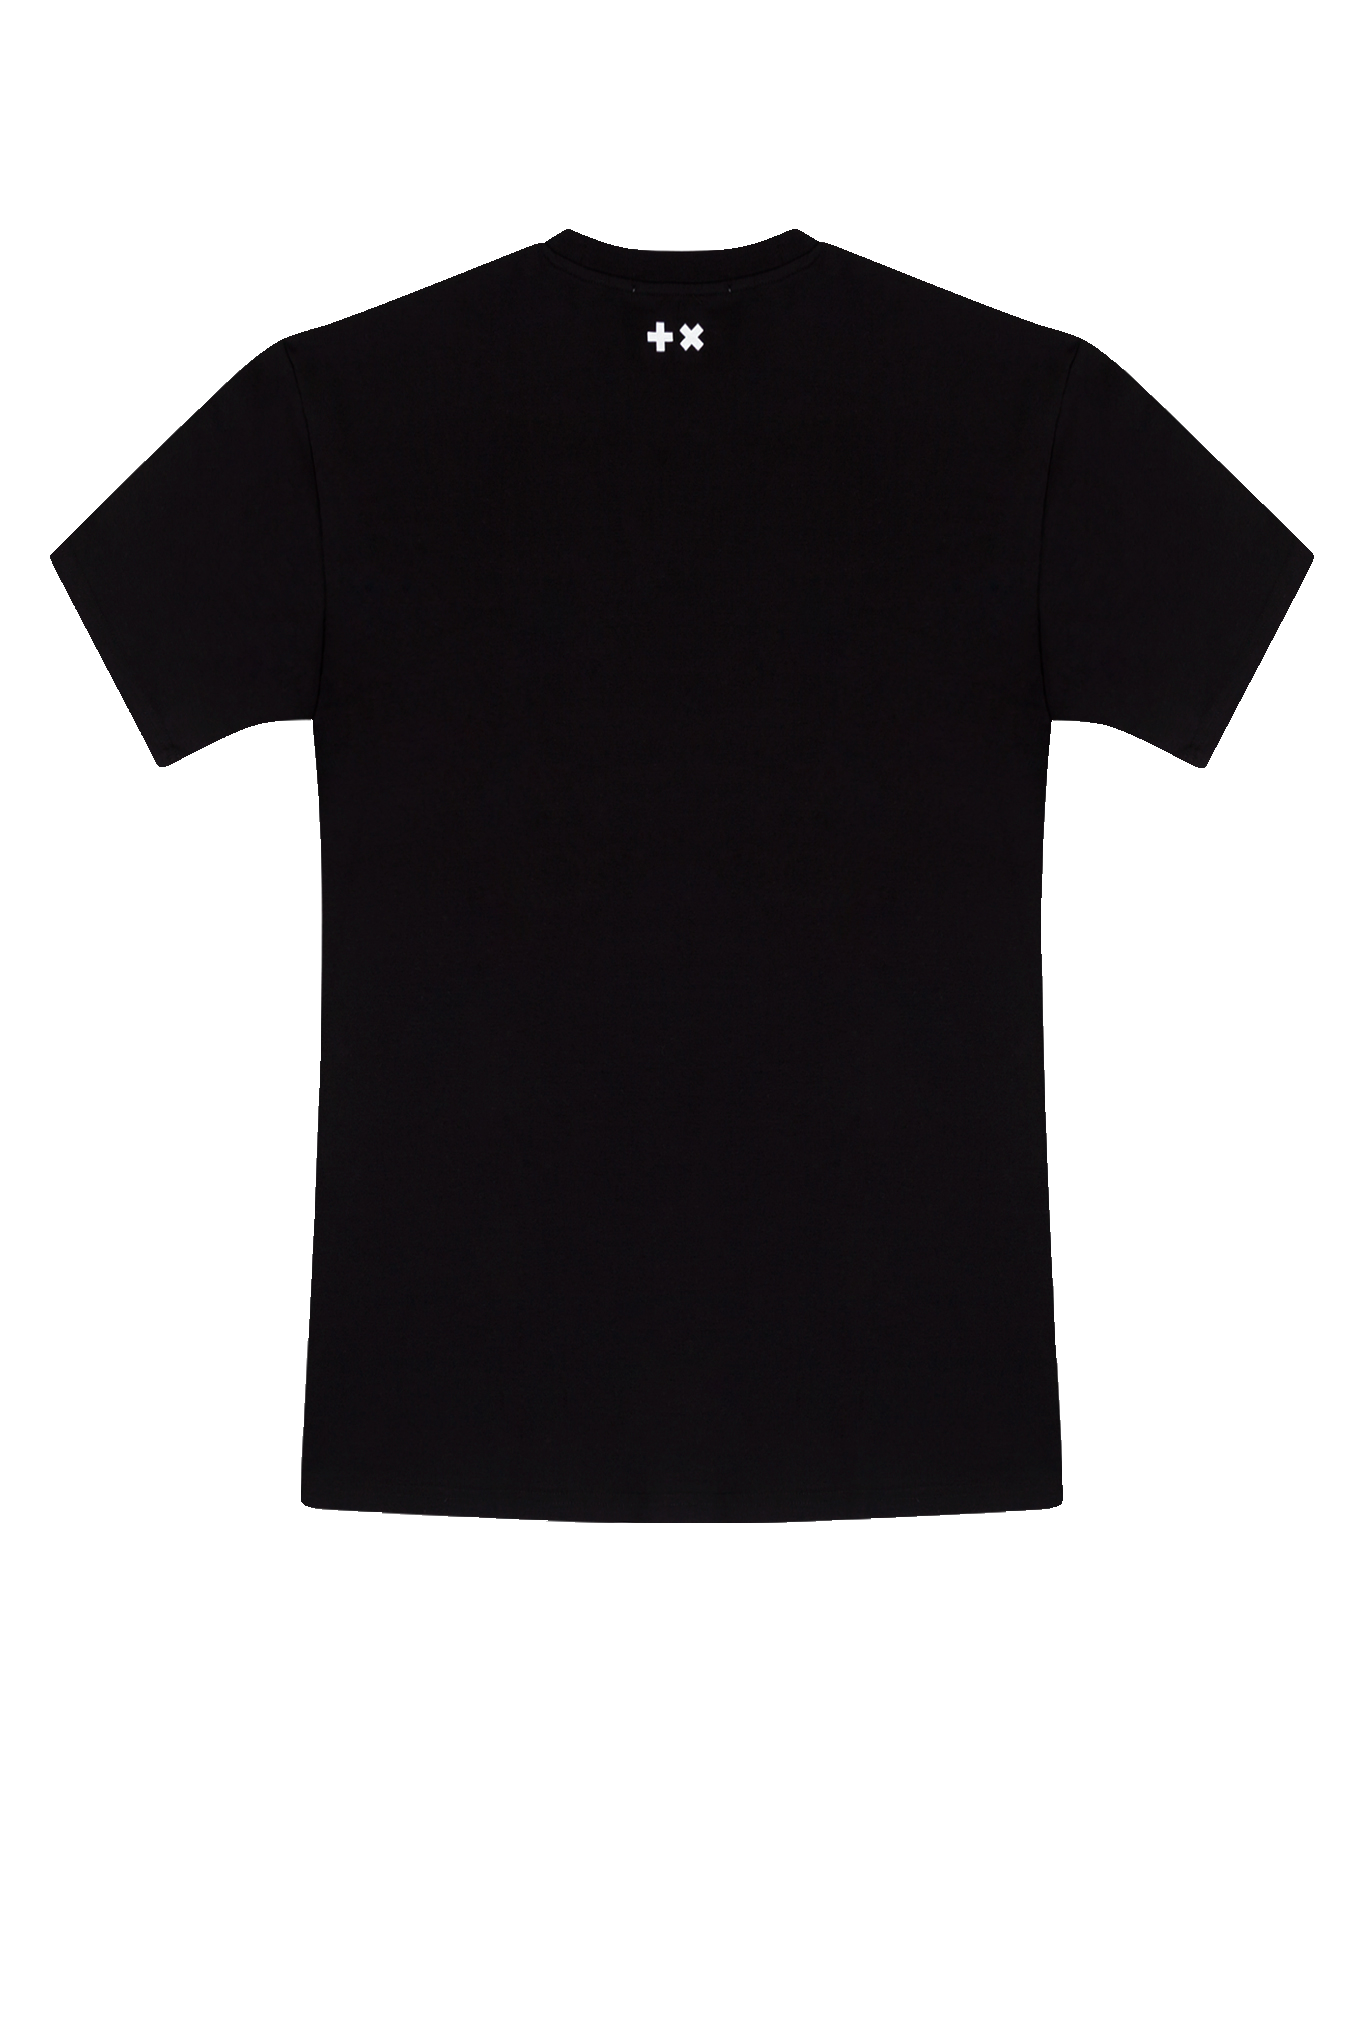 Cotton hitam t-shirt PNG foto Gambar